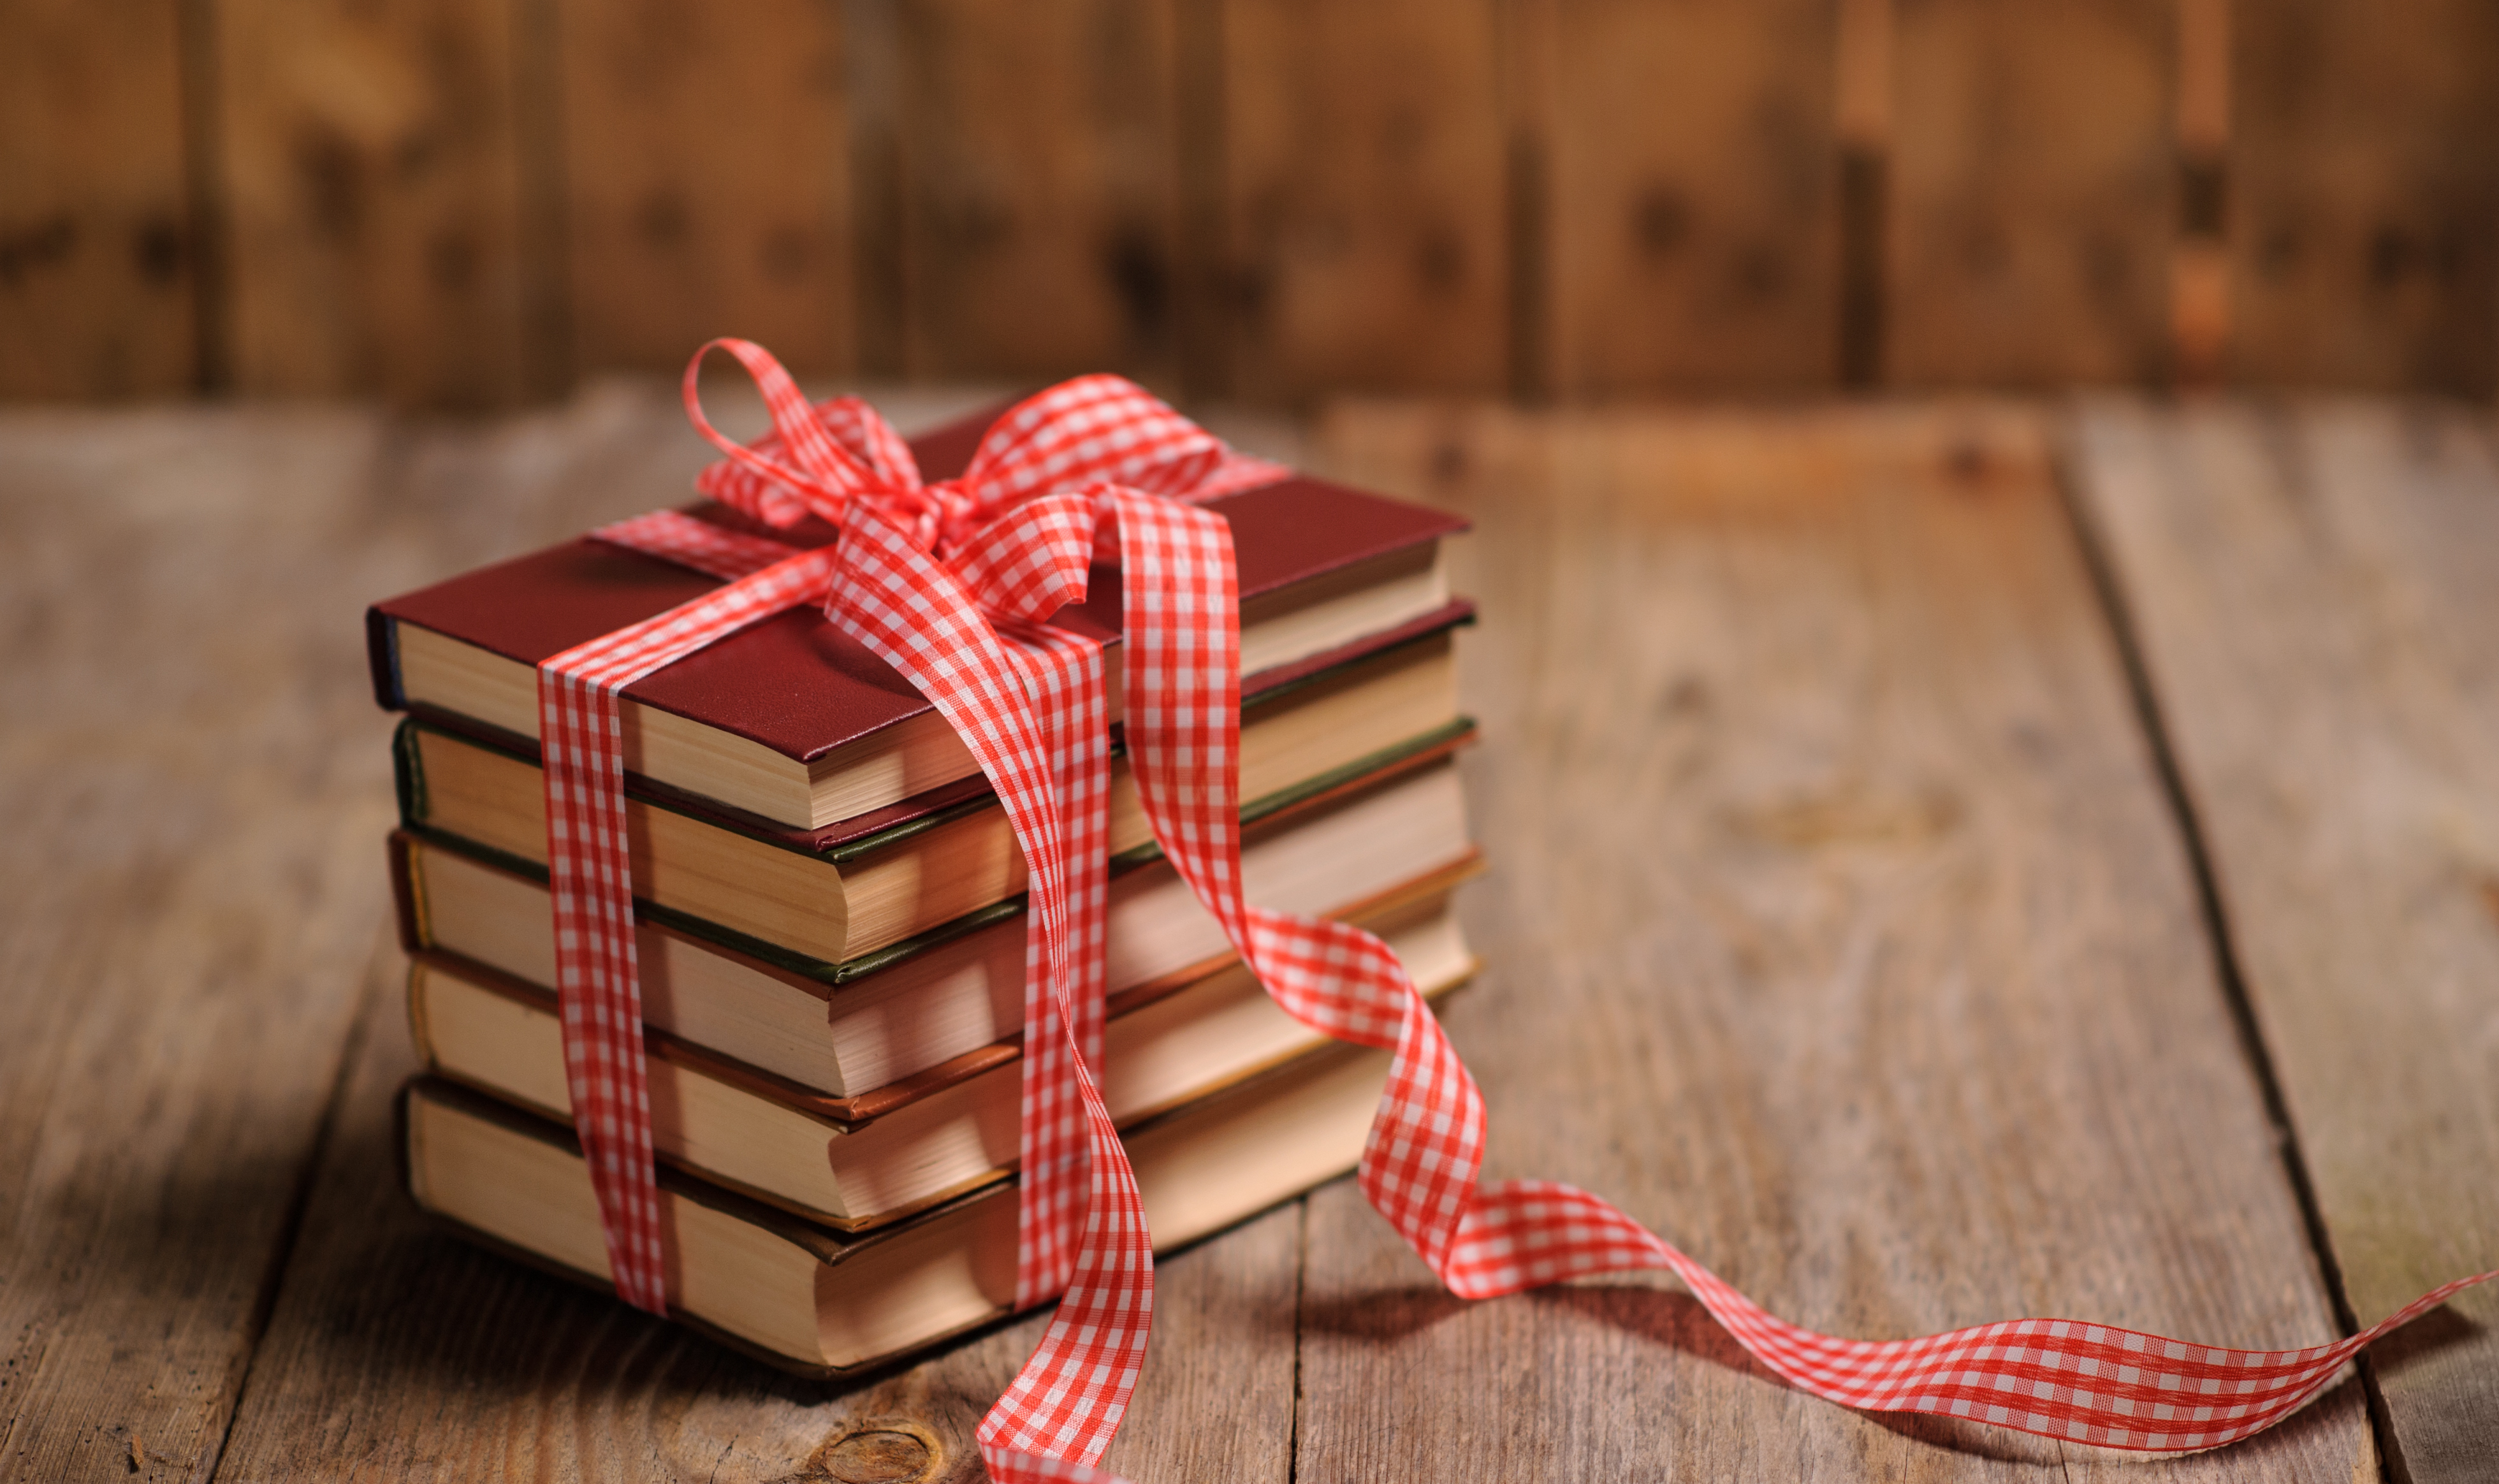 books-gift